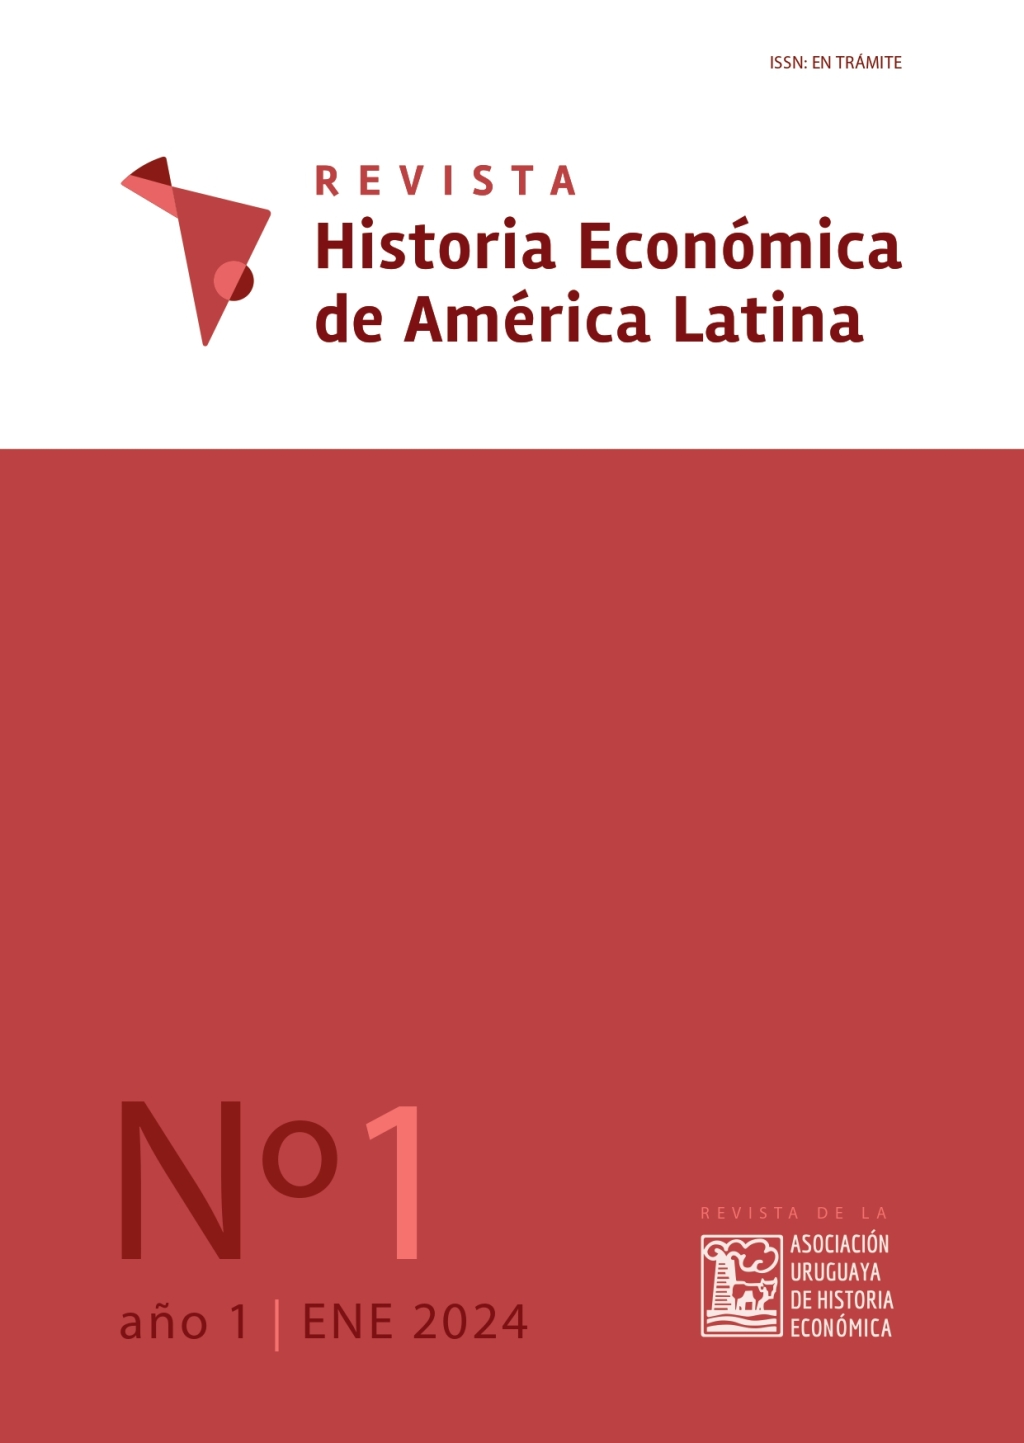 Letture: Revista Historia Económica de AméricaLatina (RHEAL), January 2024, Year 1